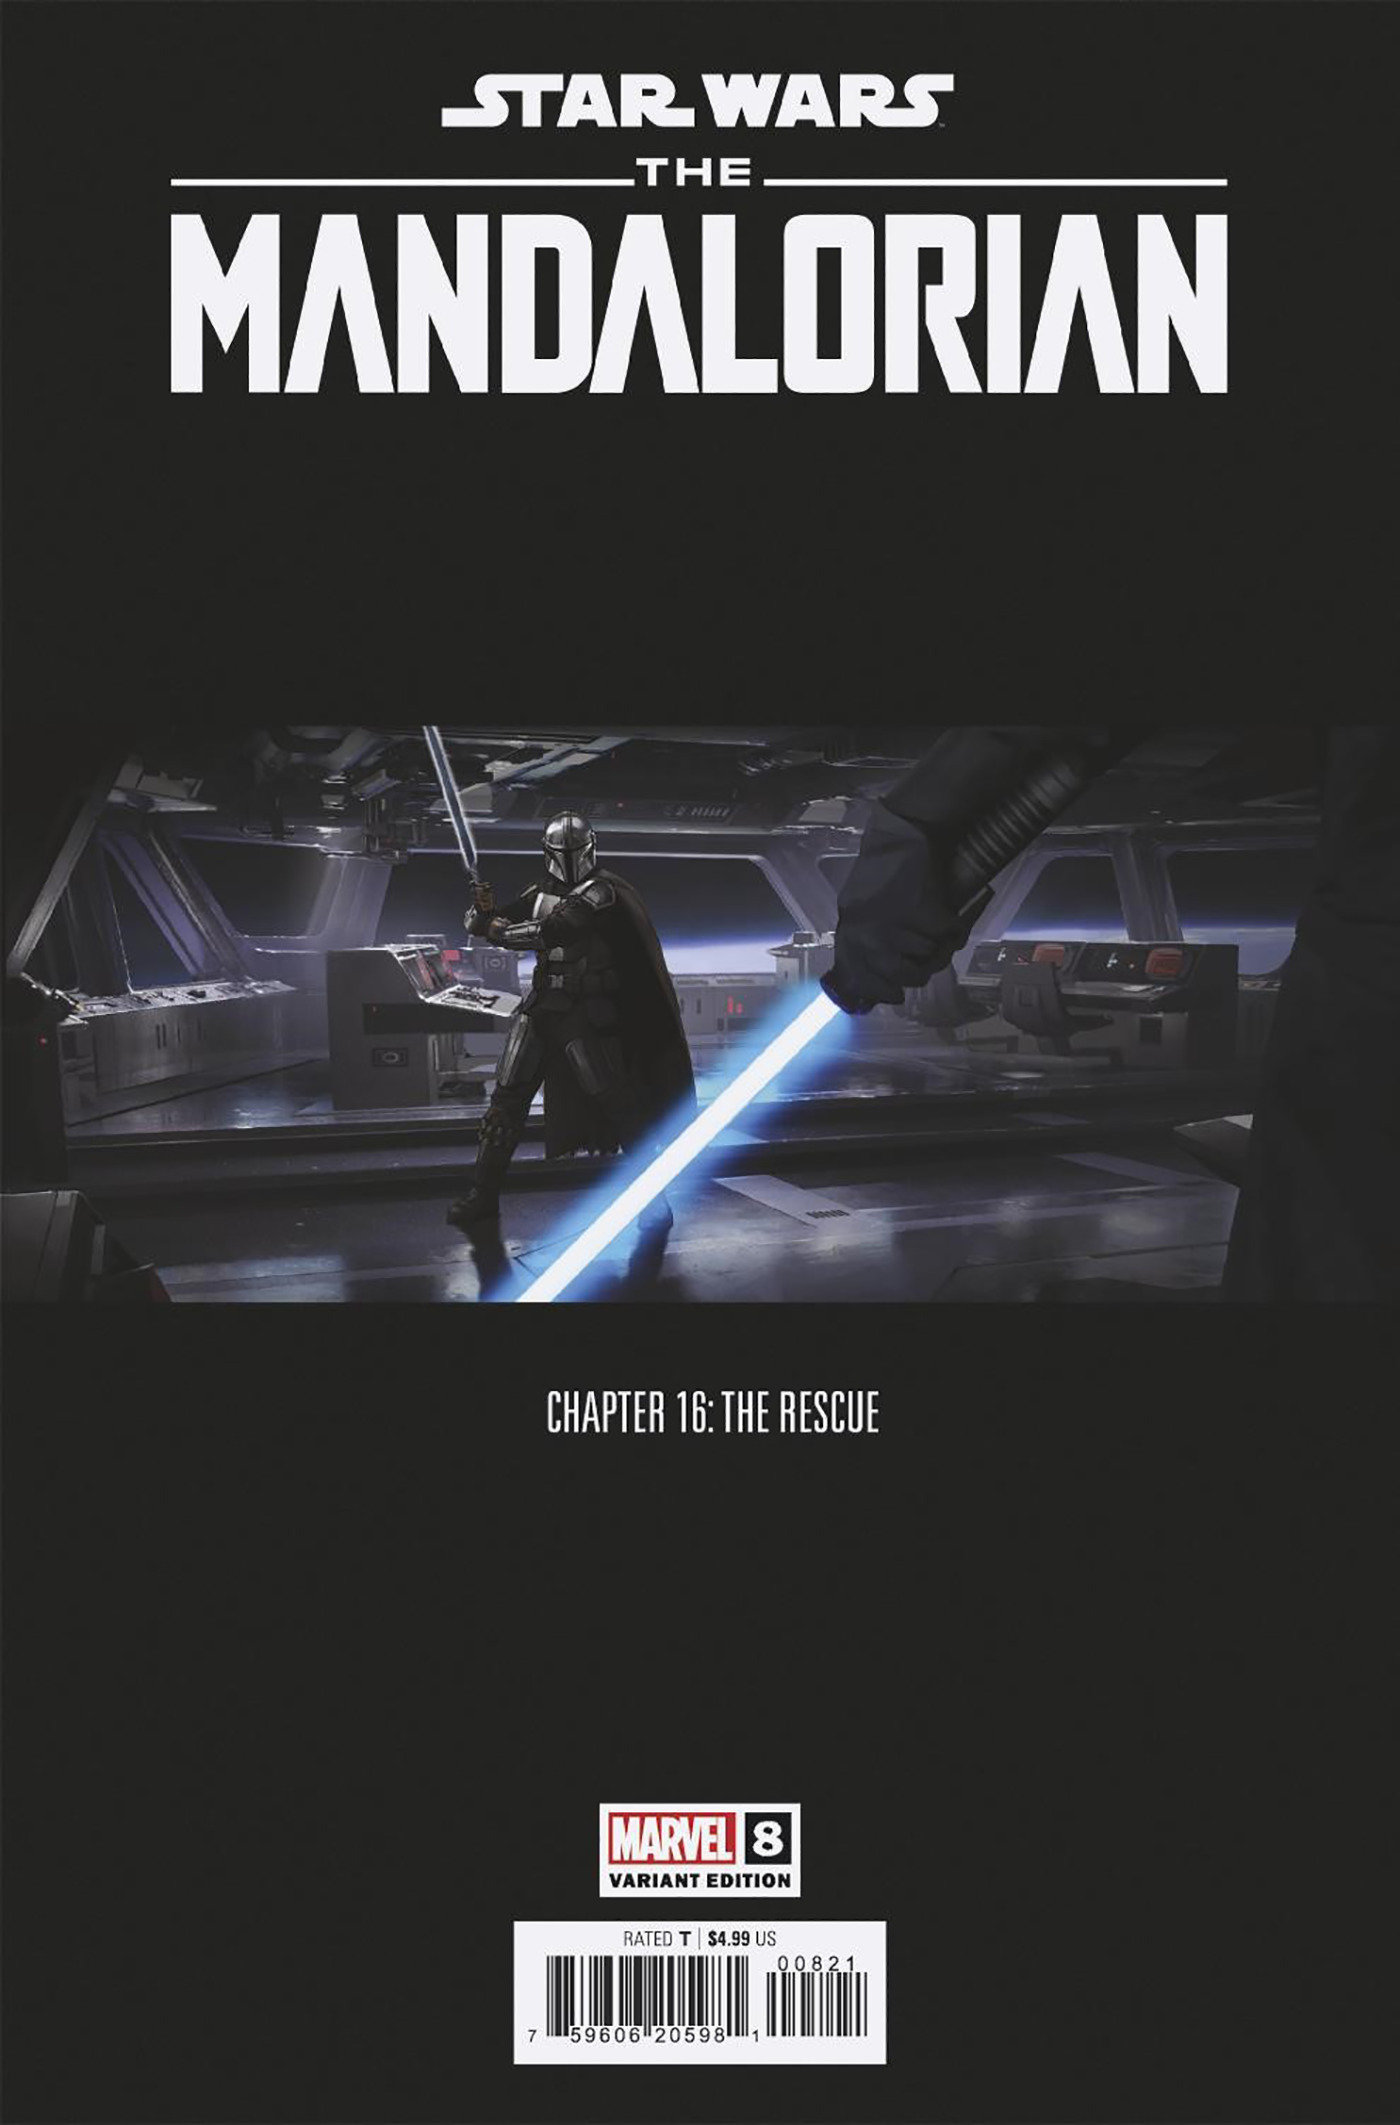 Star Wars: The Mandalorian Season 2 #8 Concept Art Variant